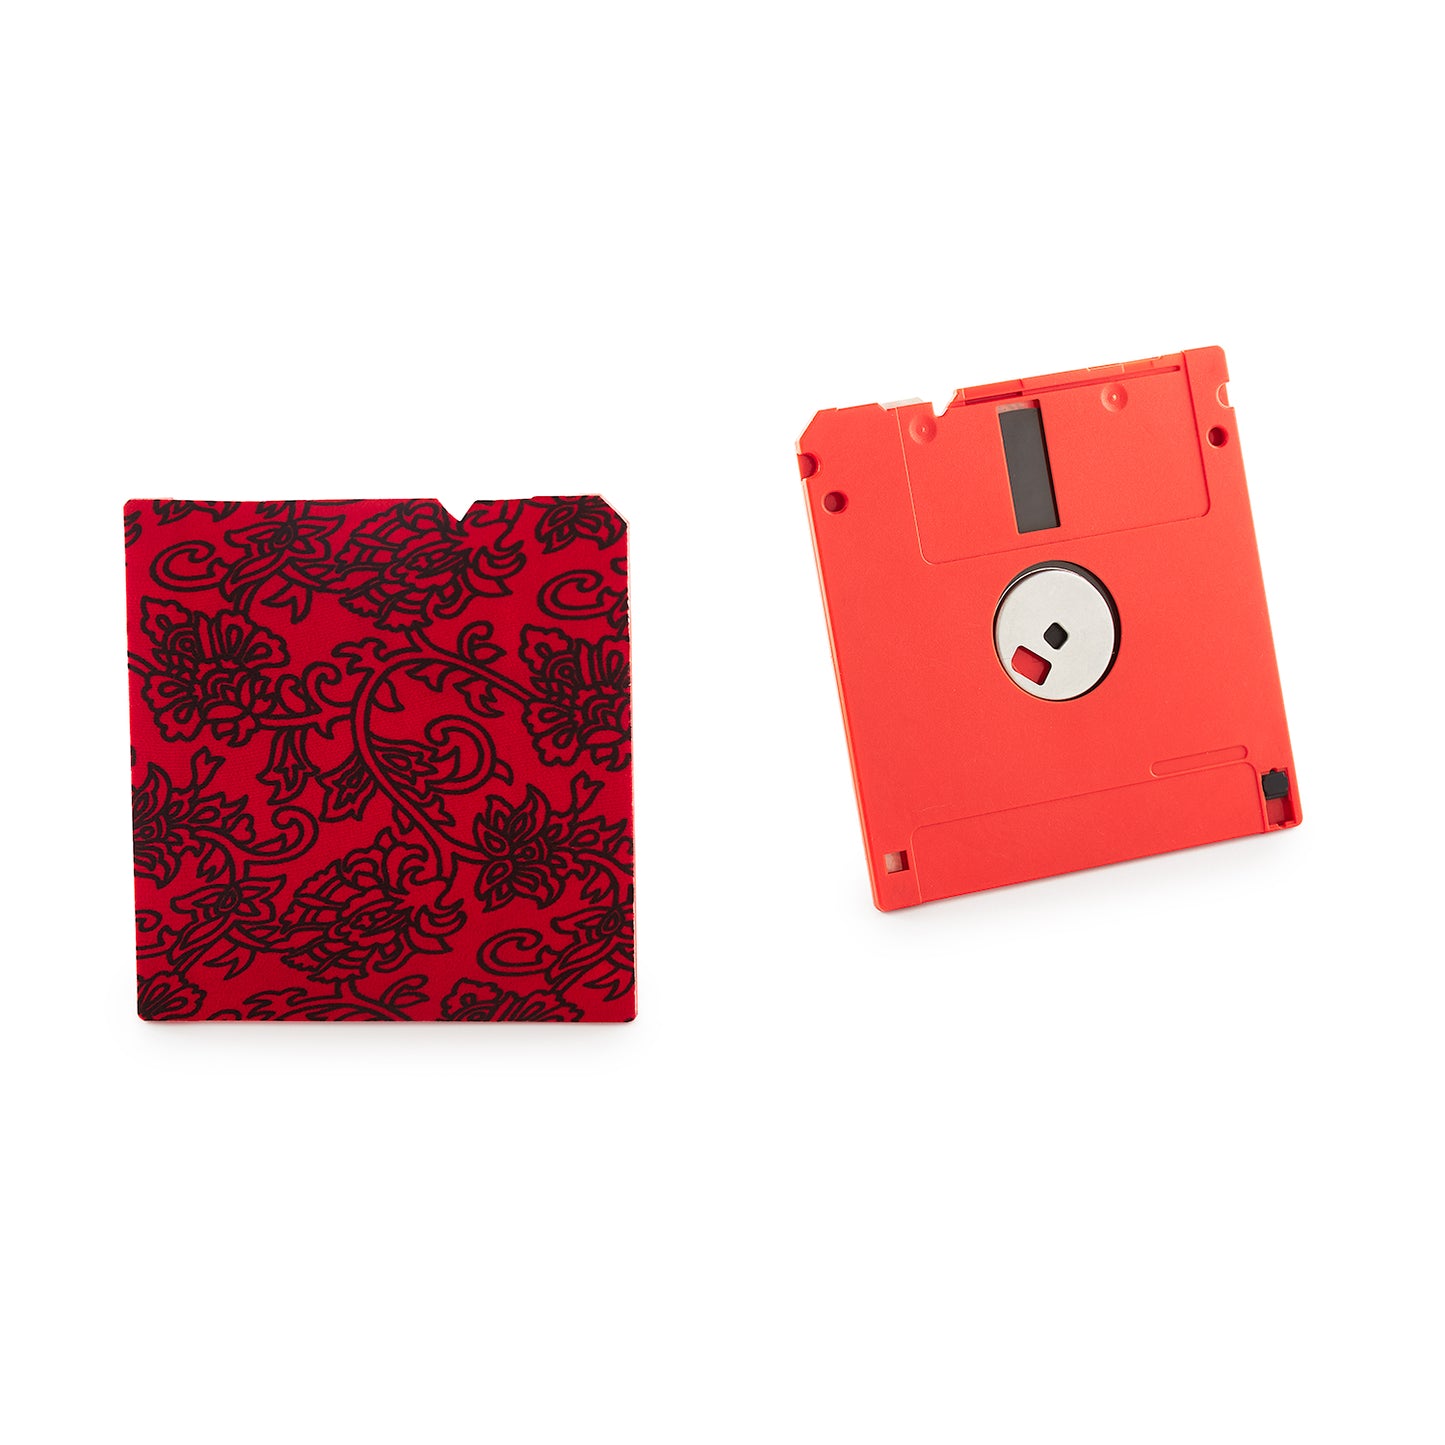 Set of 2 - Designer Fabric of Old Floppy Disks Coasters